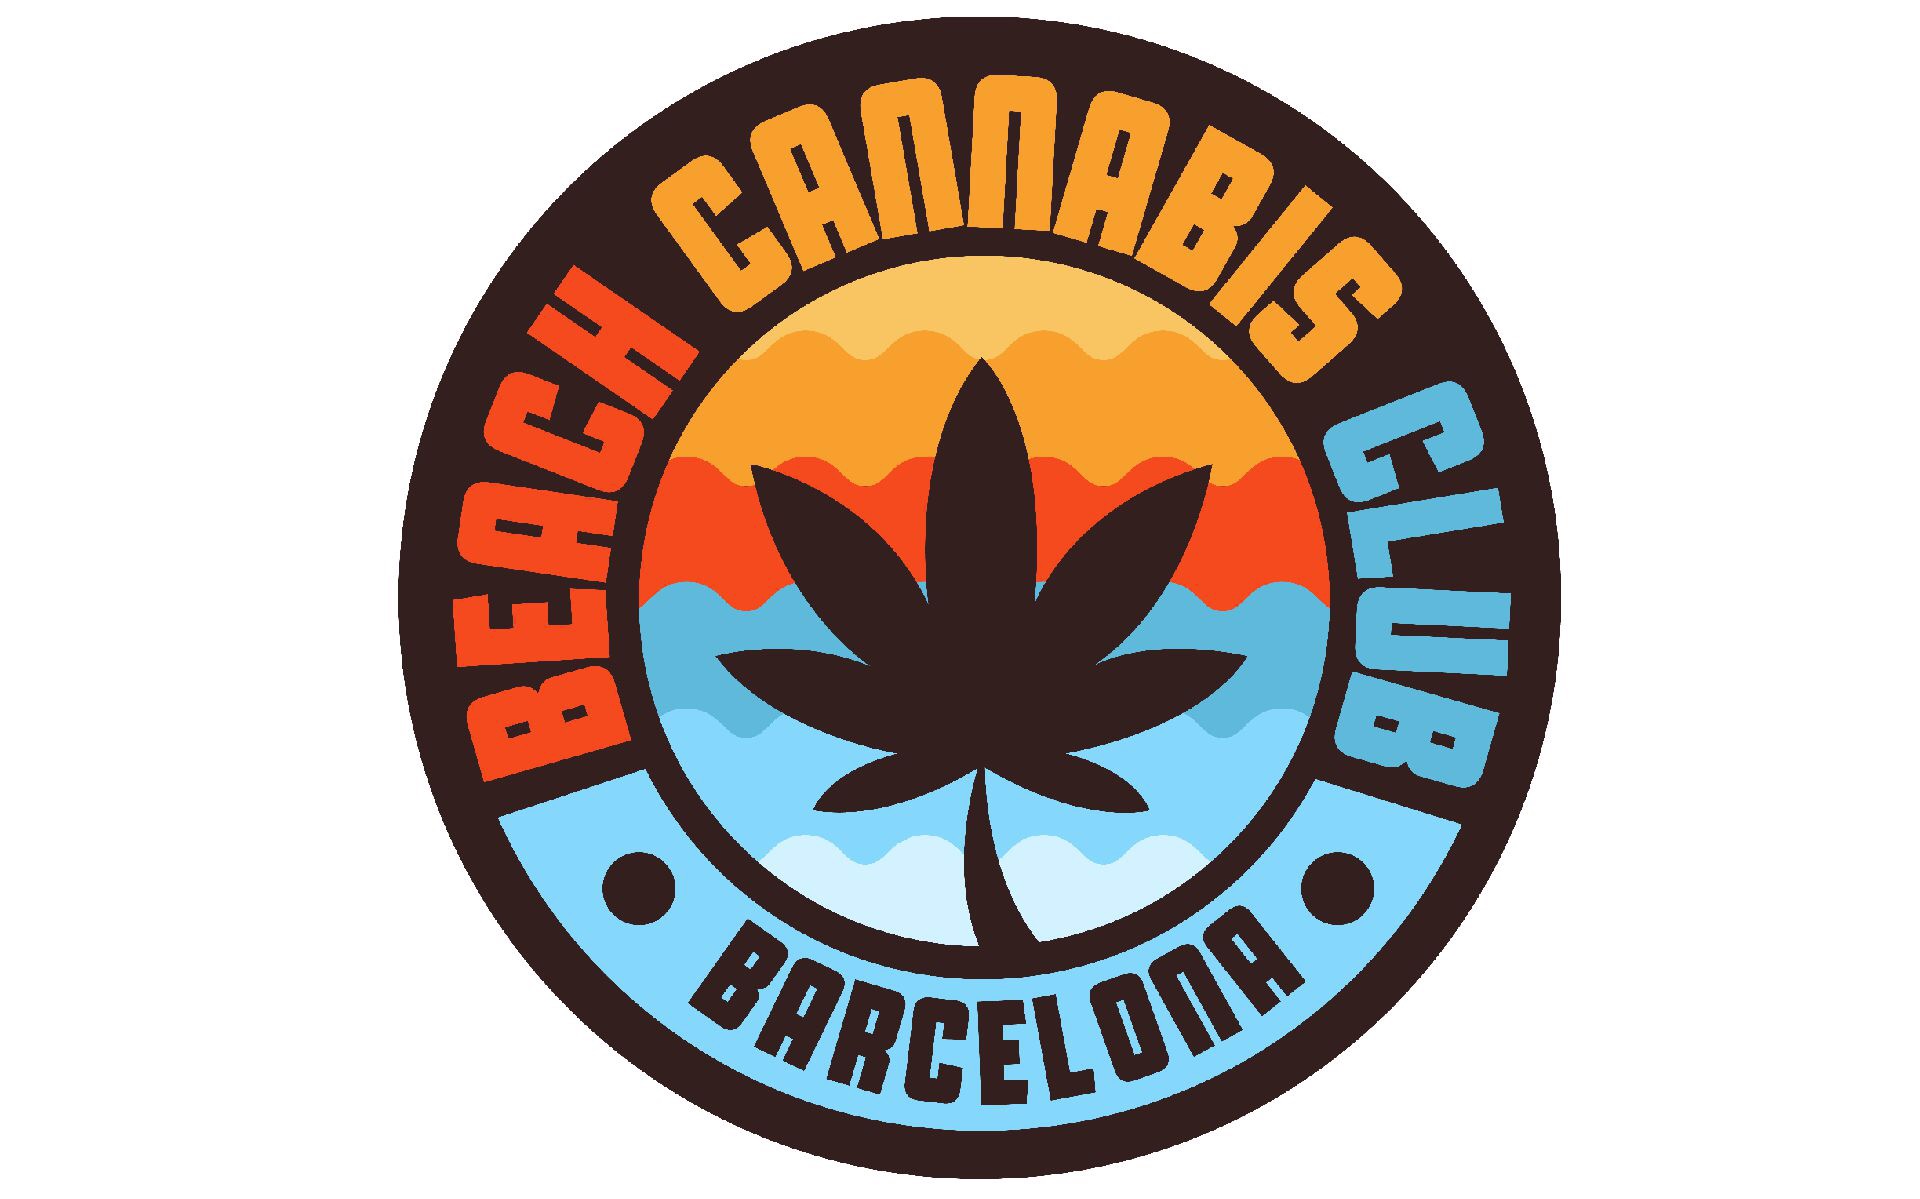 weed club beach barcelona